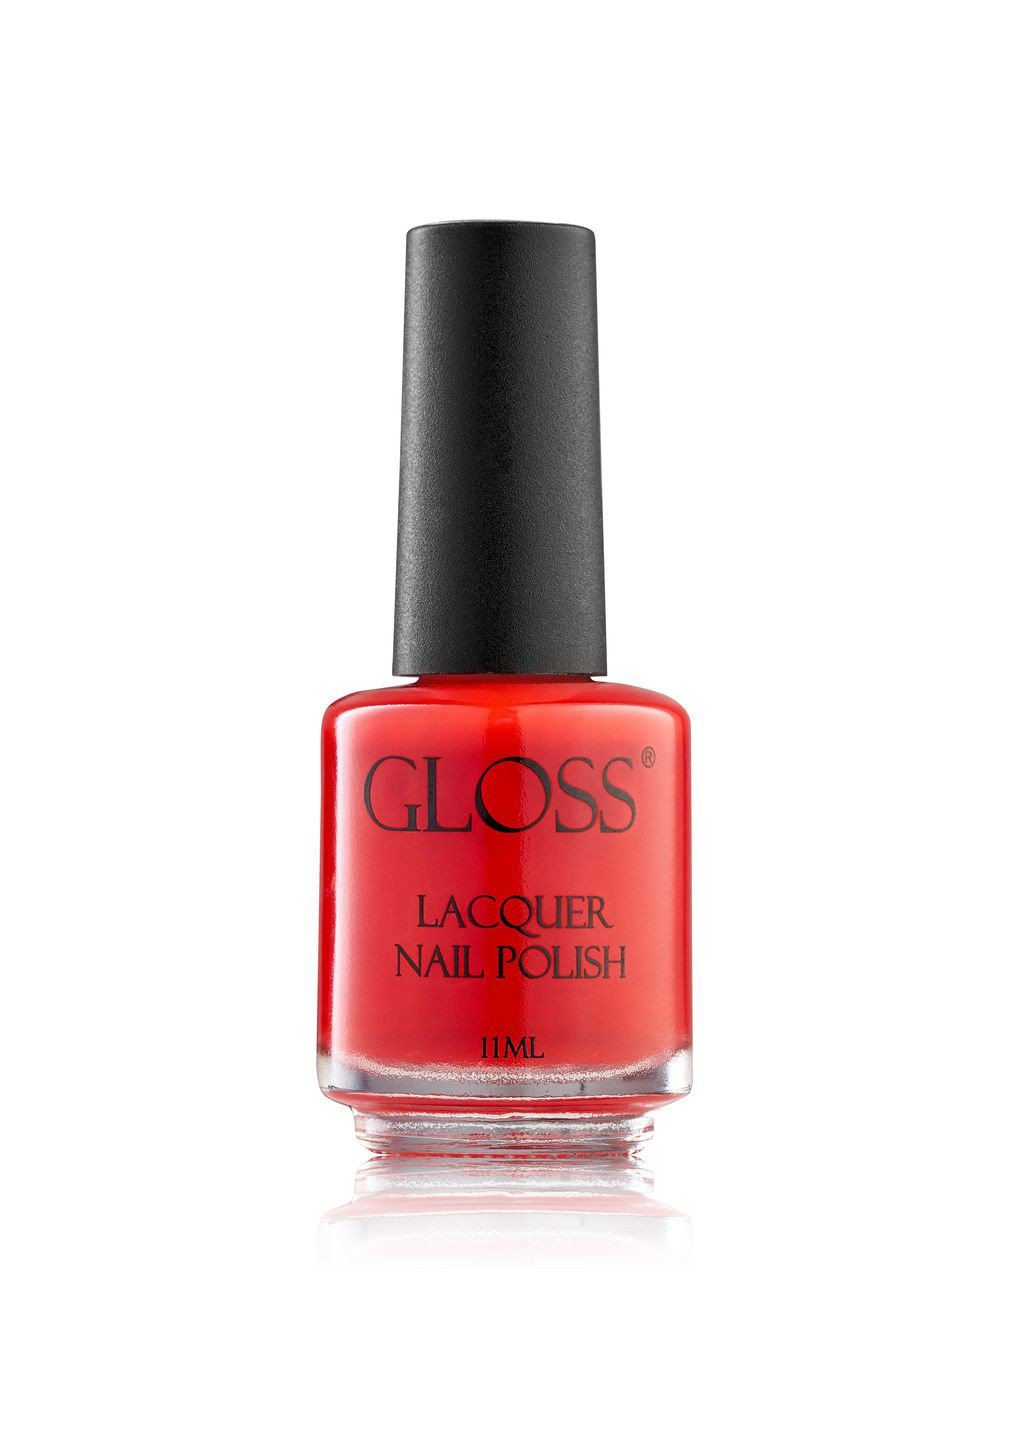 Лак для ногтей GLOSS 004, 11 мл Gloss Company lacquer nail polish (276255619)